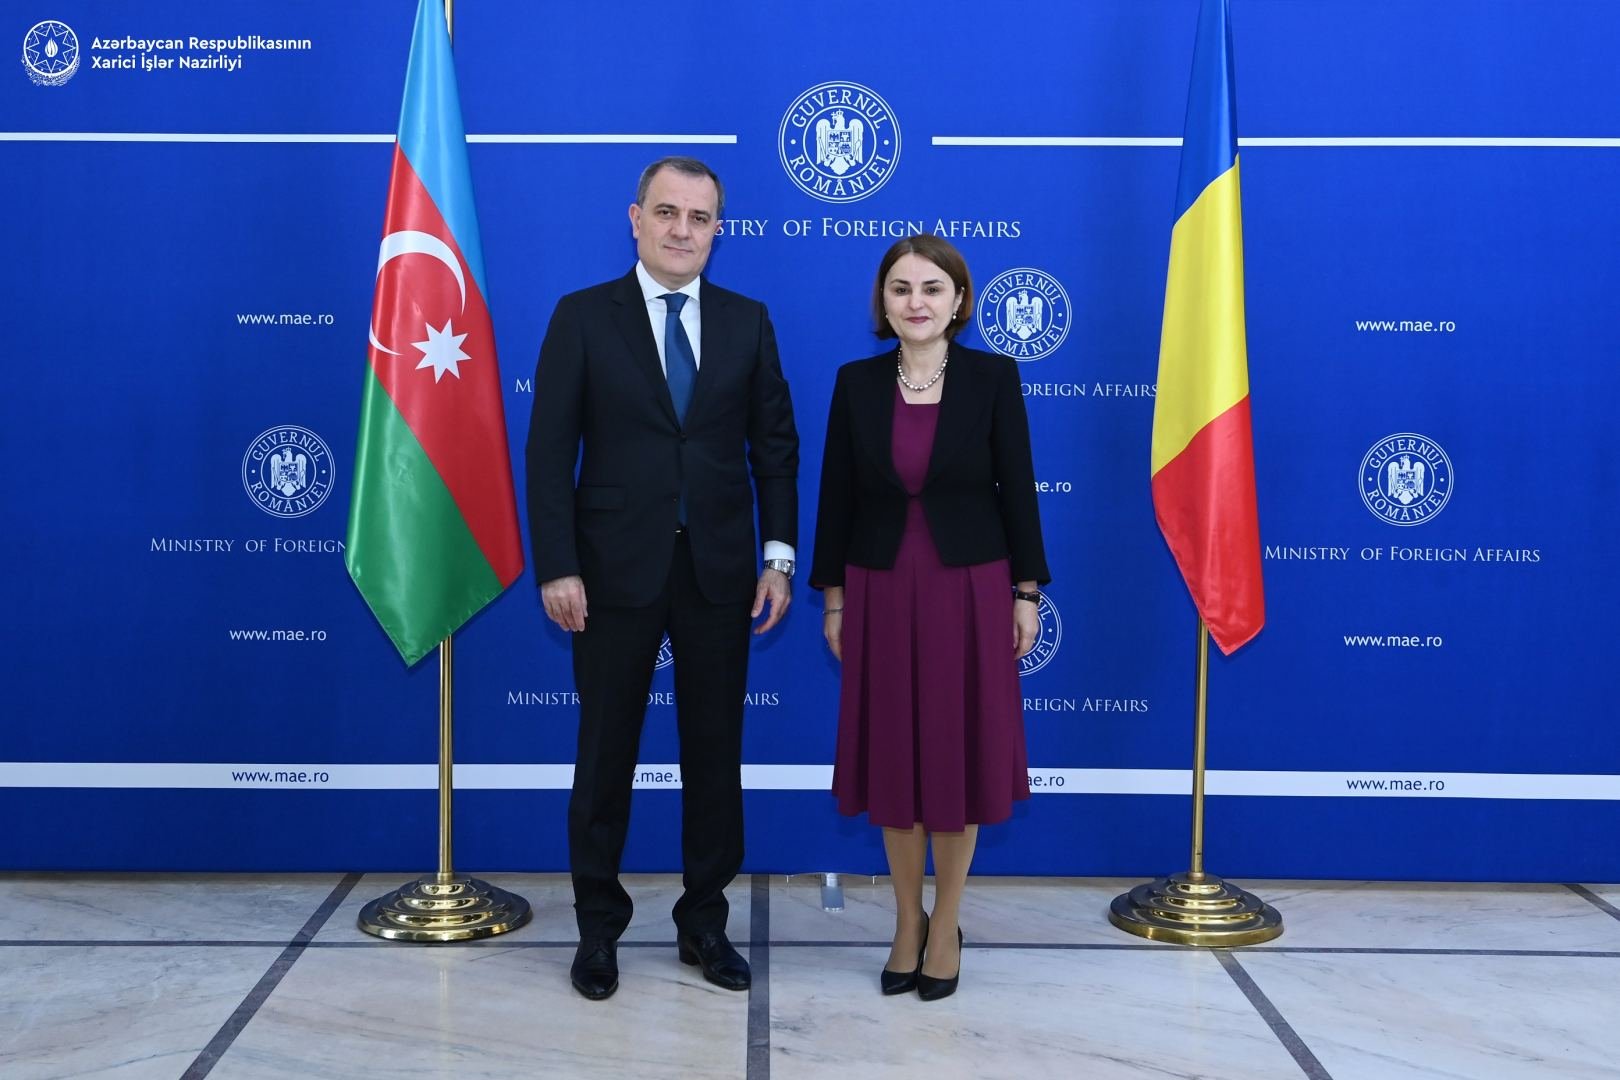 Romania in favor of normalizing relations between Azerbaijan and Armenia - FM